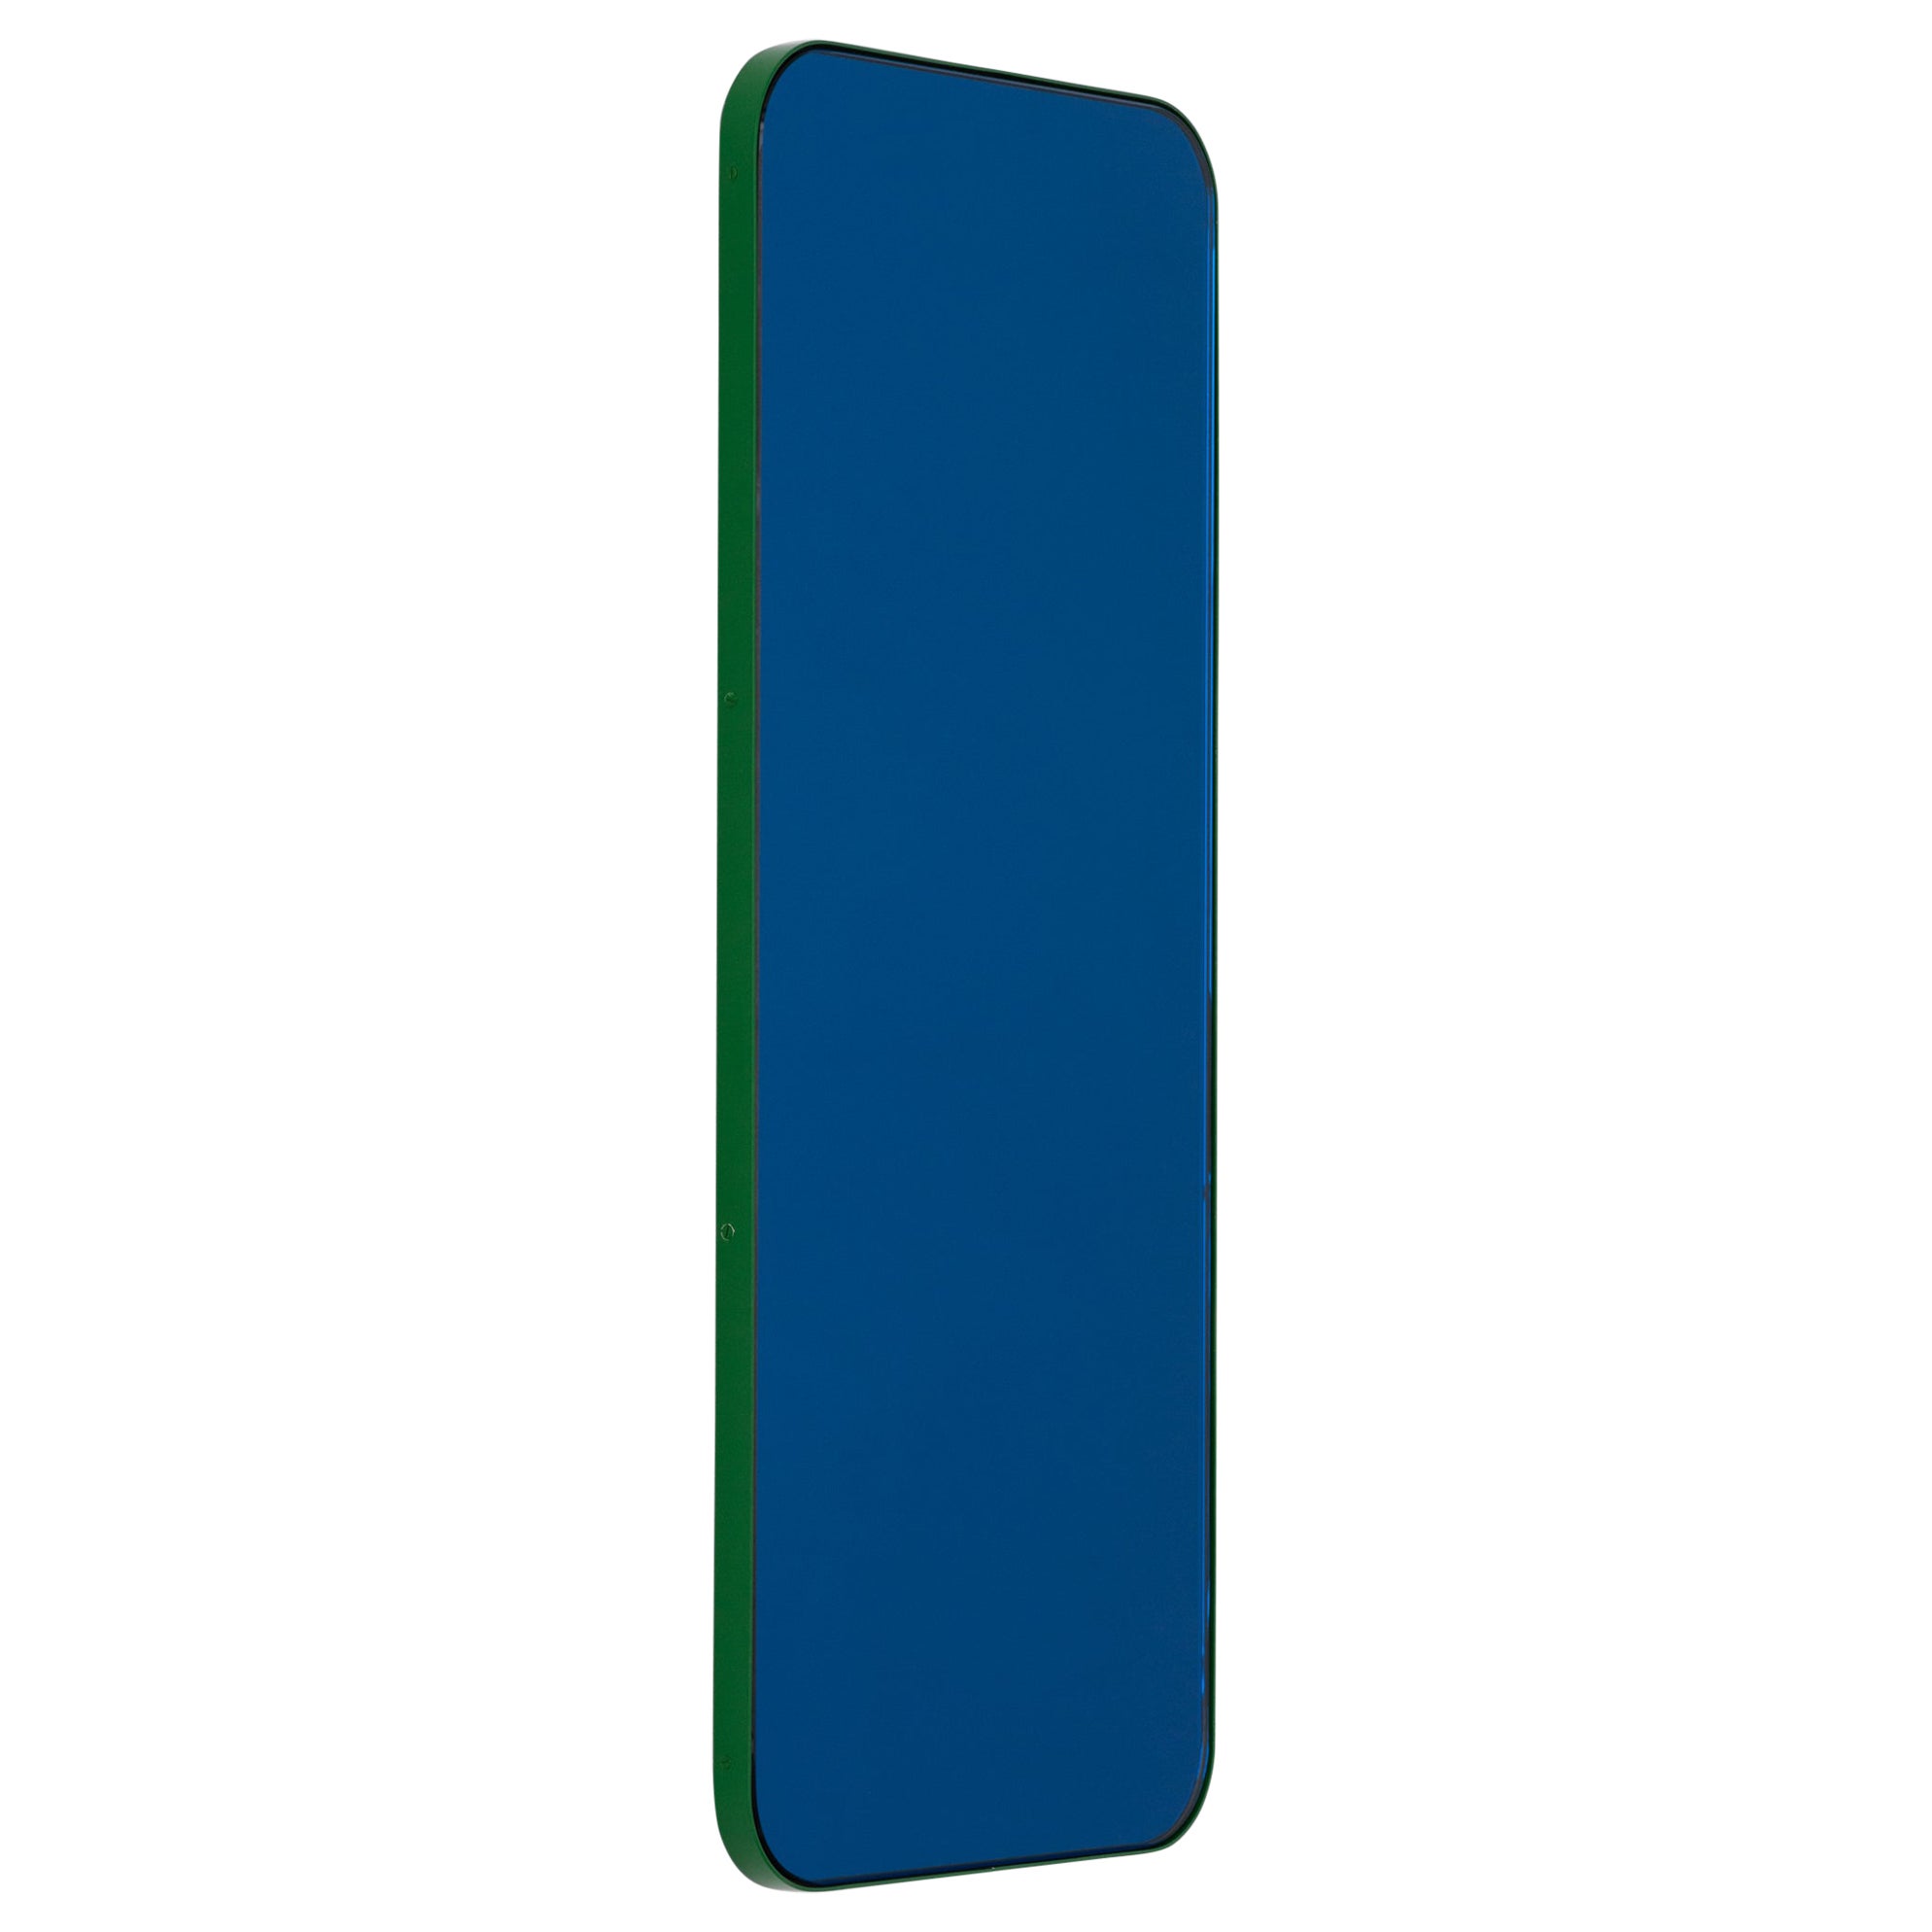 Quadris Miroir rectangulaire contemporain bleu avec cadre Modernity Greene & Greene, large en vente